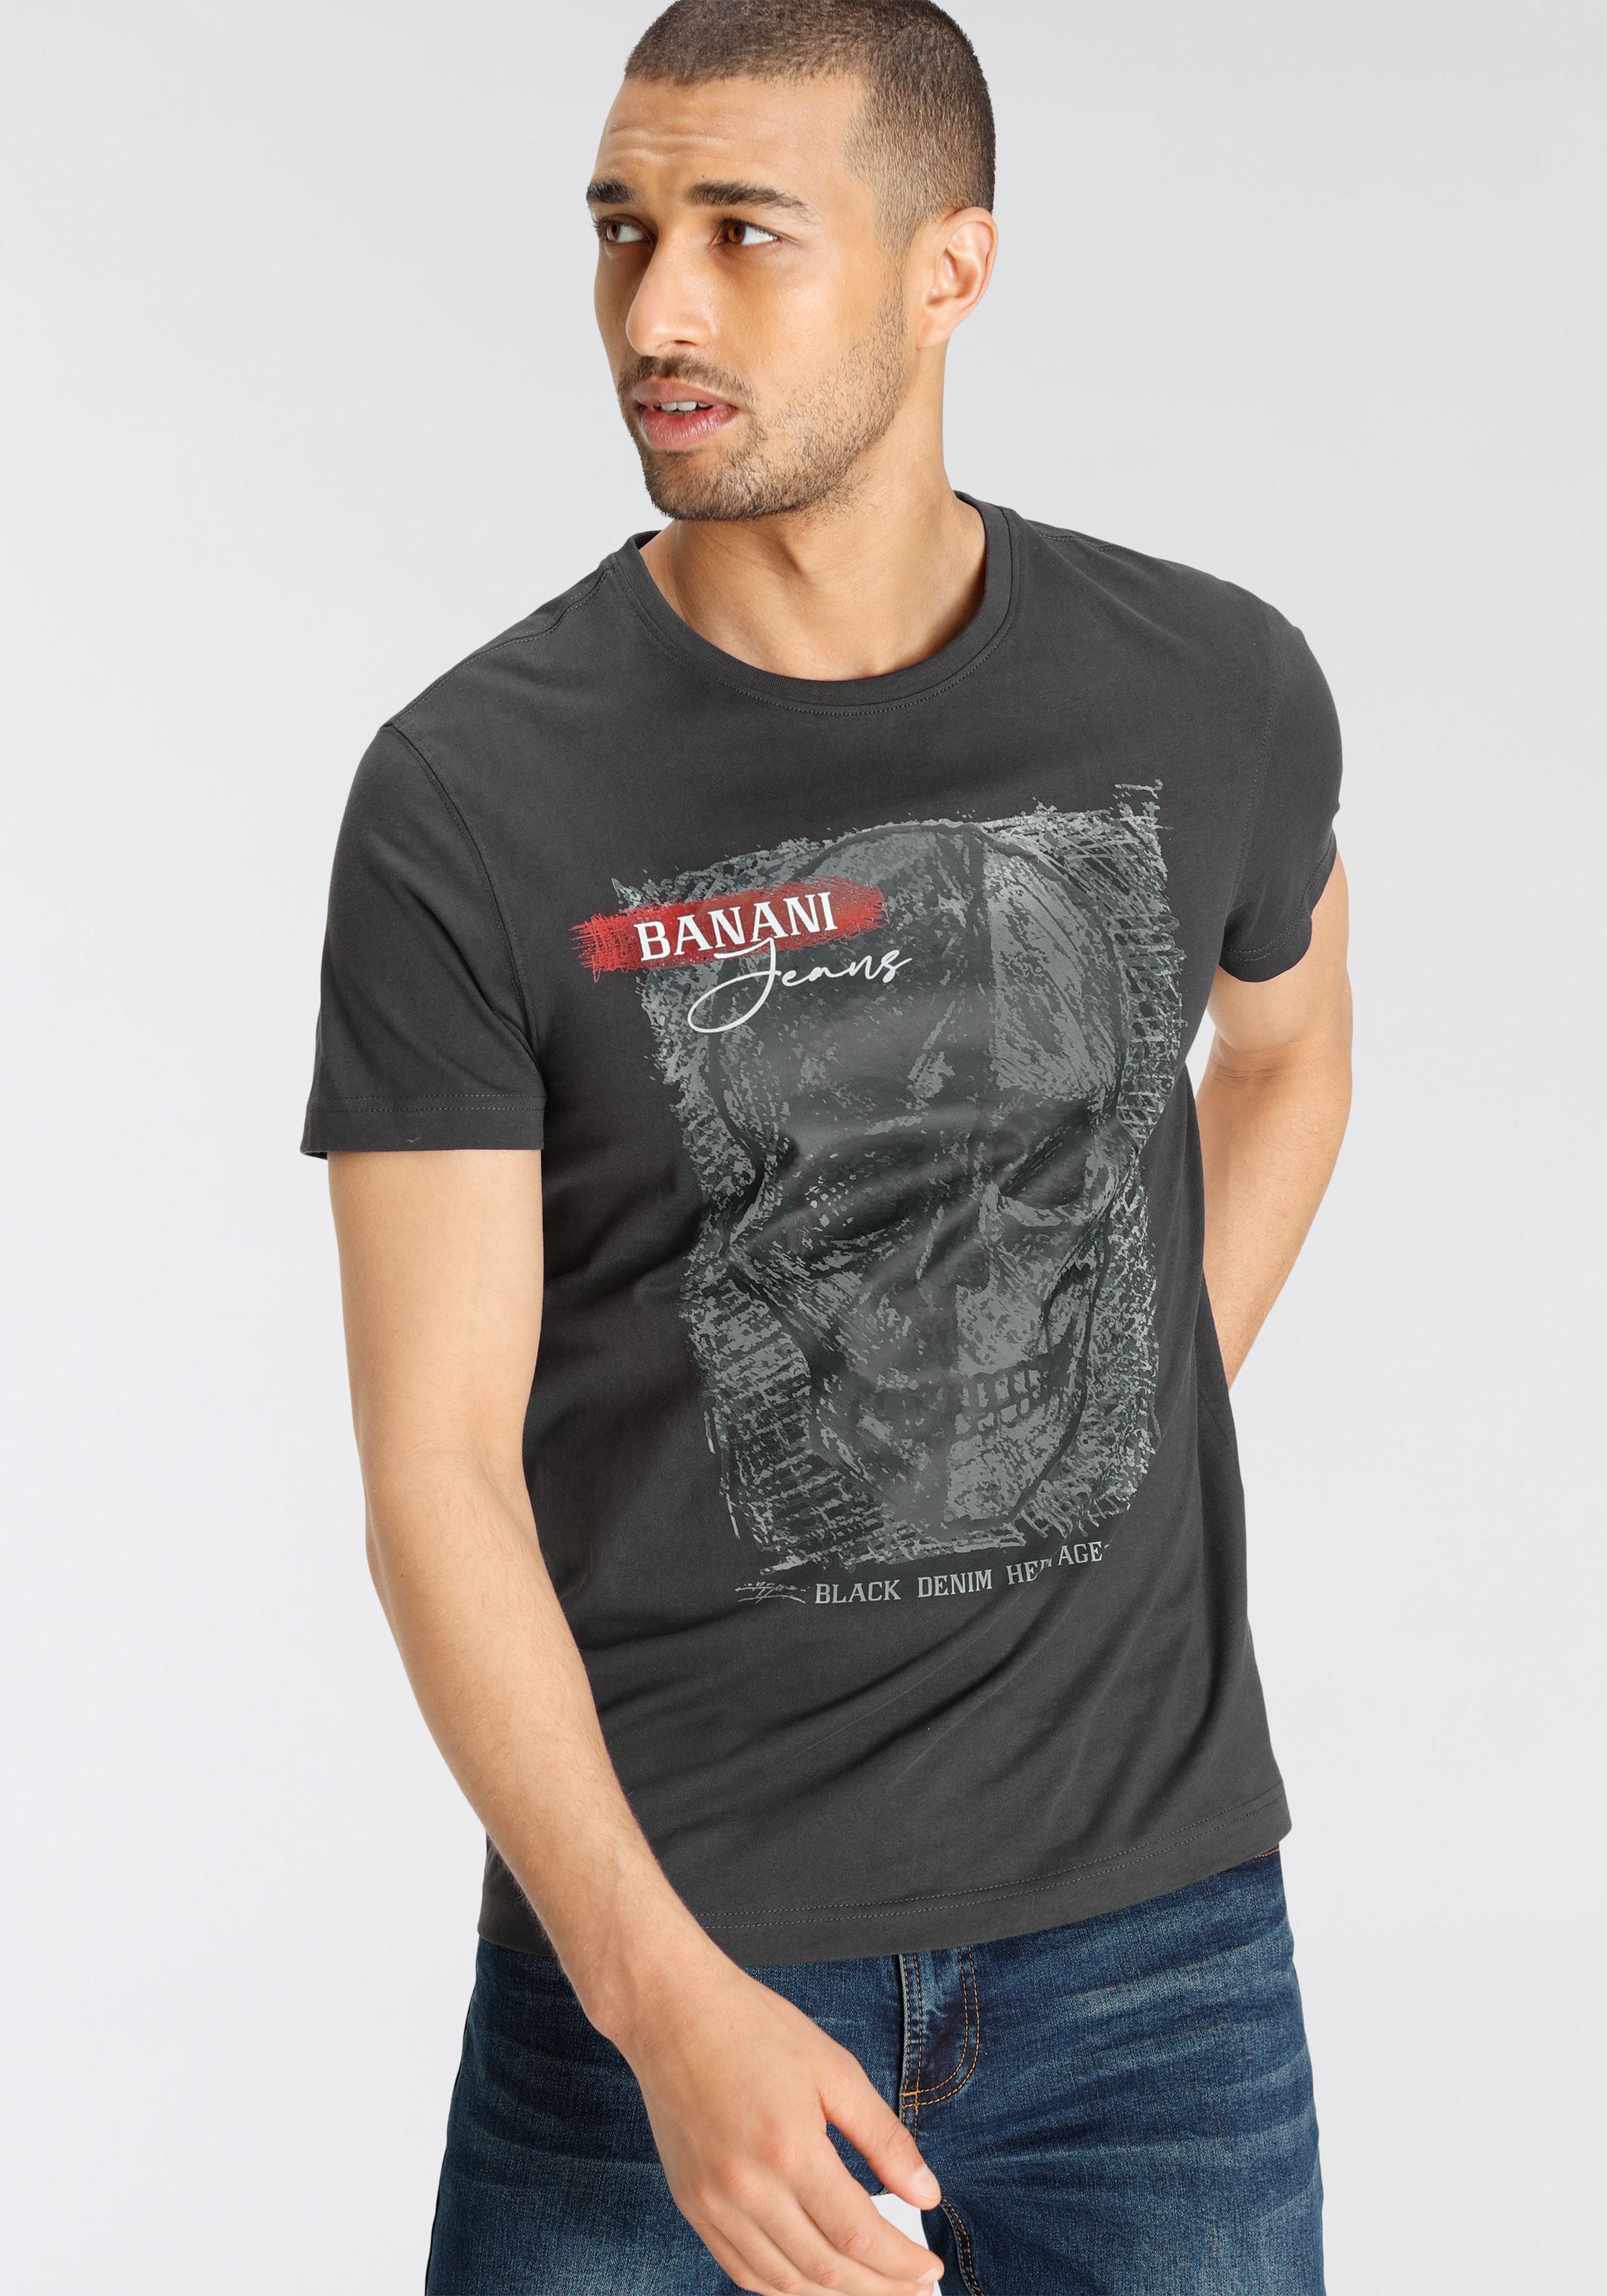 online Bruno Jelmoli-Versand Banani T-Shirt, grossem mit Frontprint shoppen |